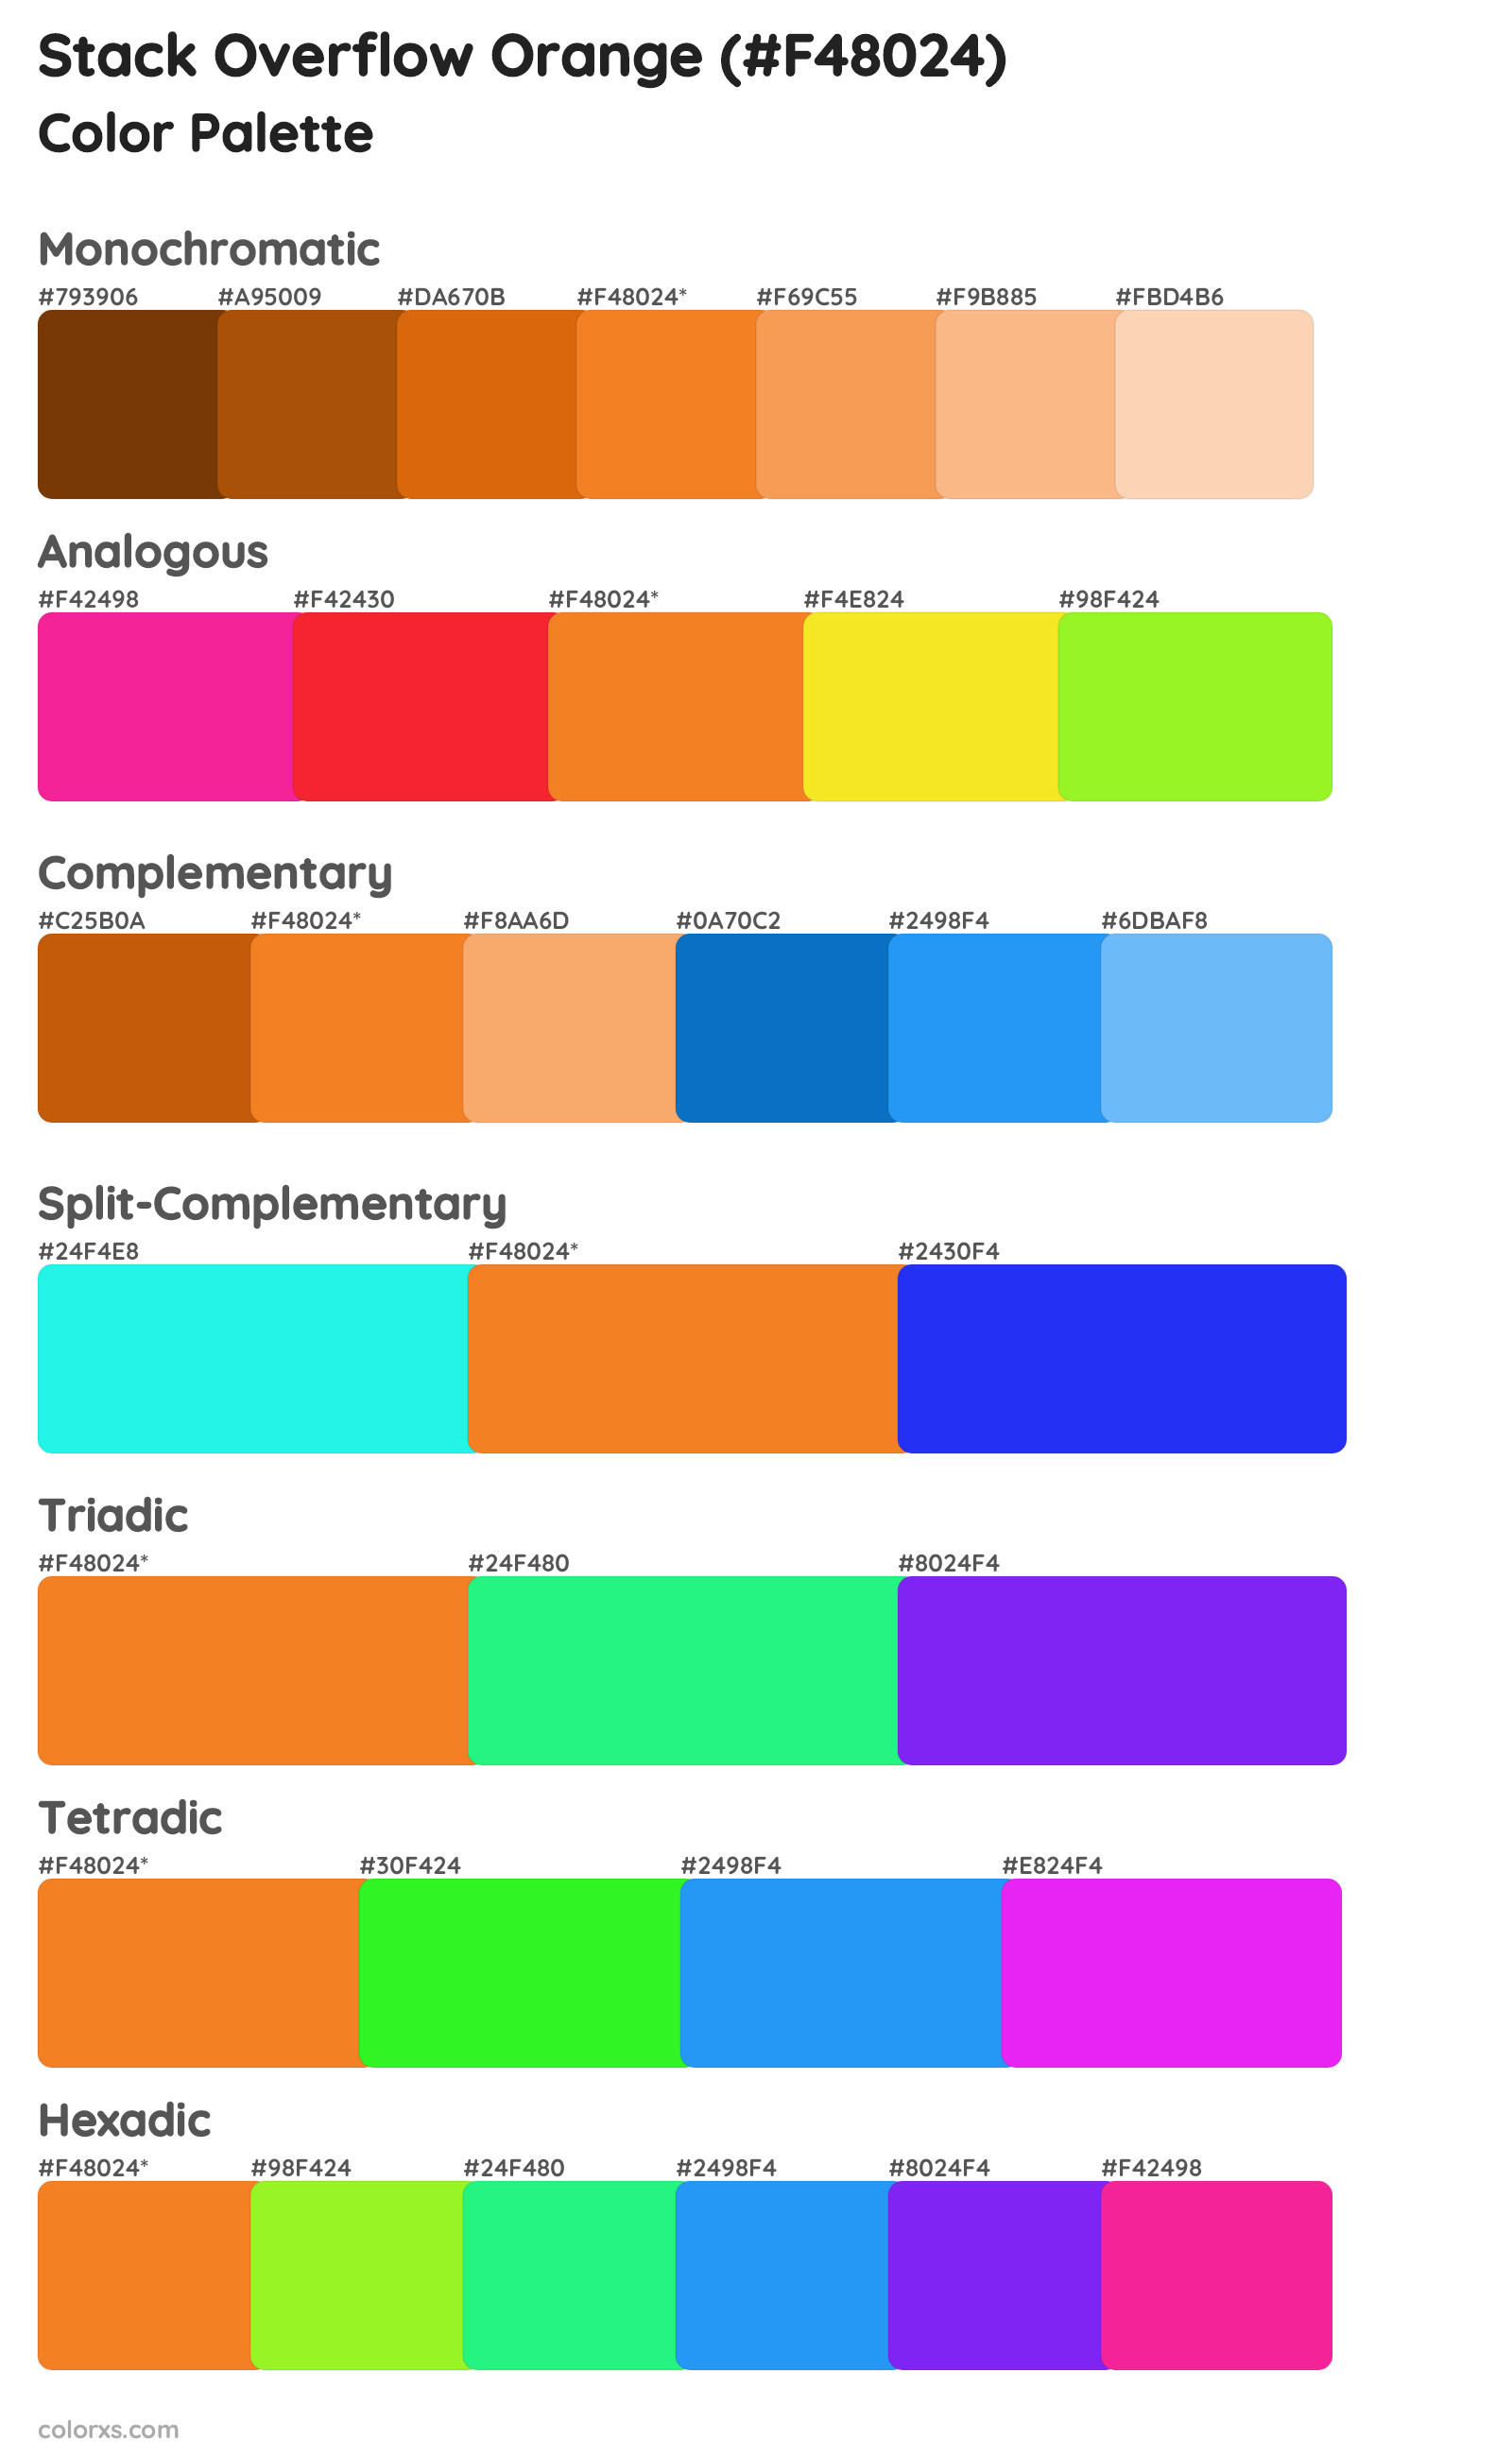 Stack Overflow Orange Color Scheme Palettes